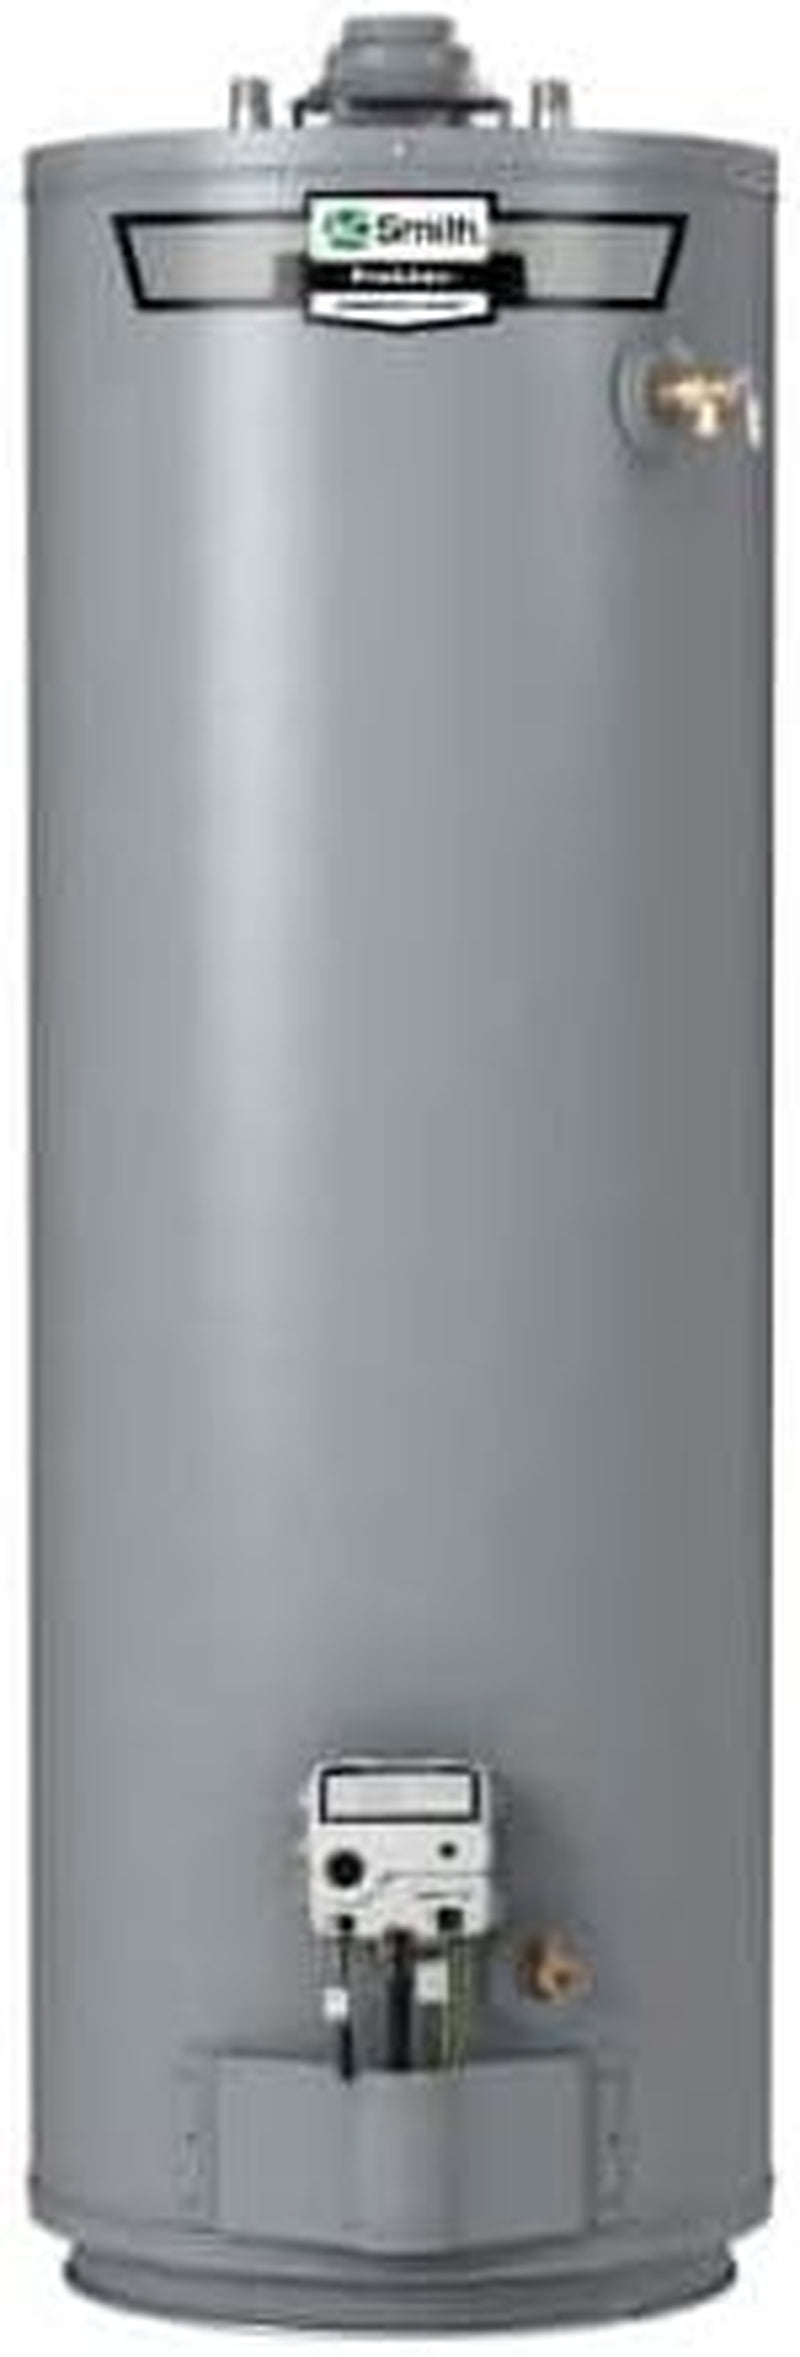 50 Gallon Proline AO Smith 10 Yr Warranty Residential Gas Water Heater